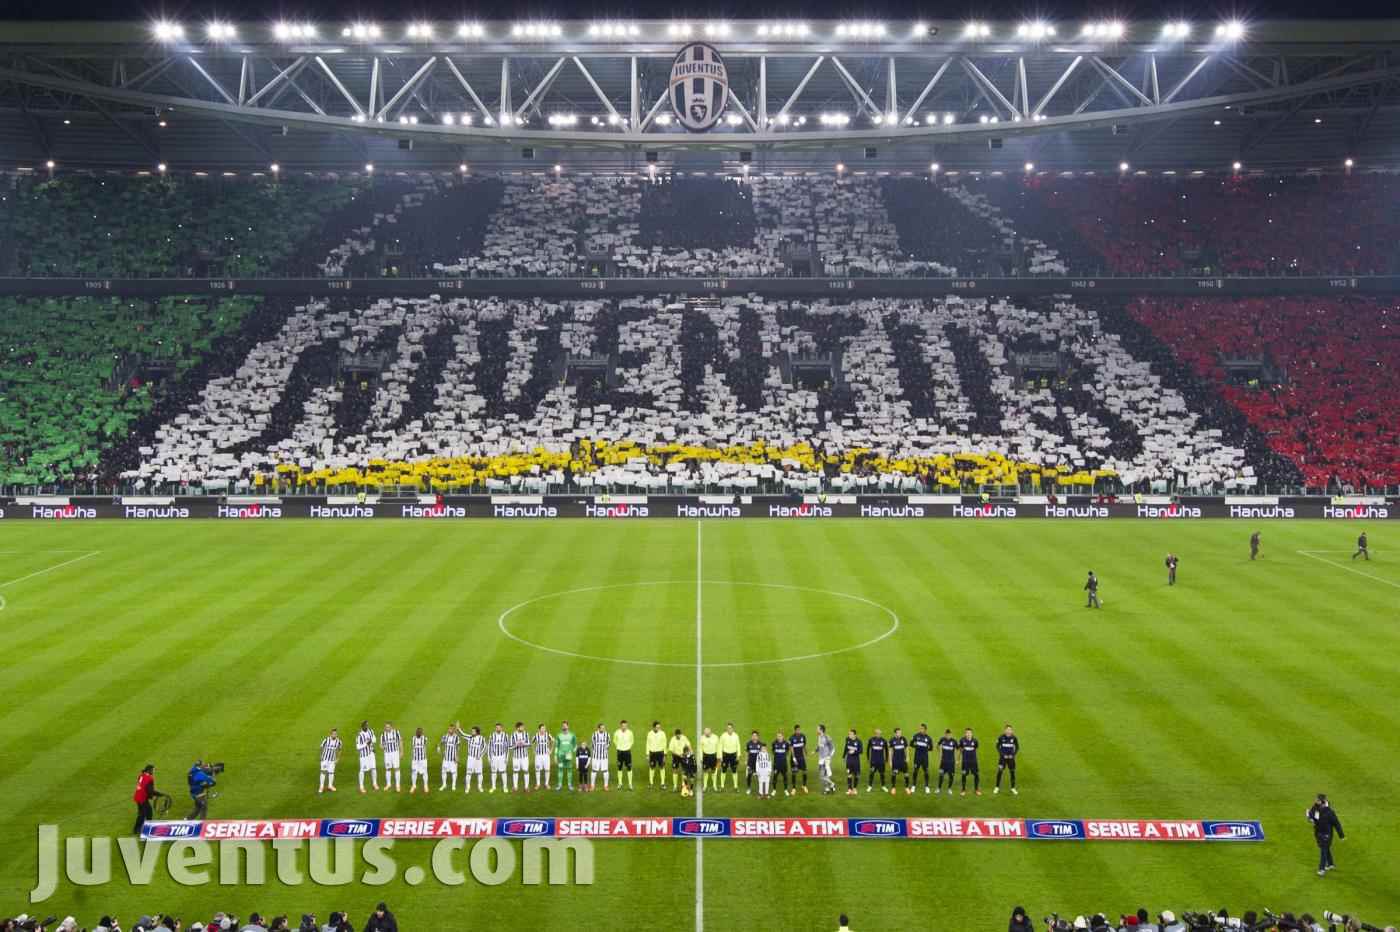 #LoveJu: How Juventus & Jeep Partner to Target the Digital Fan